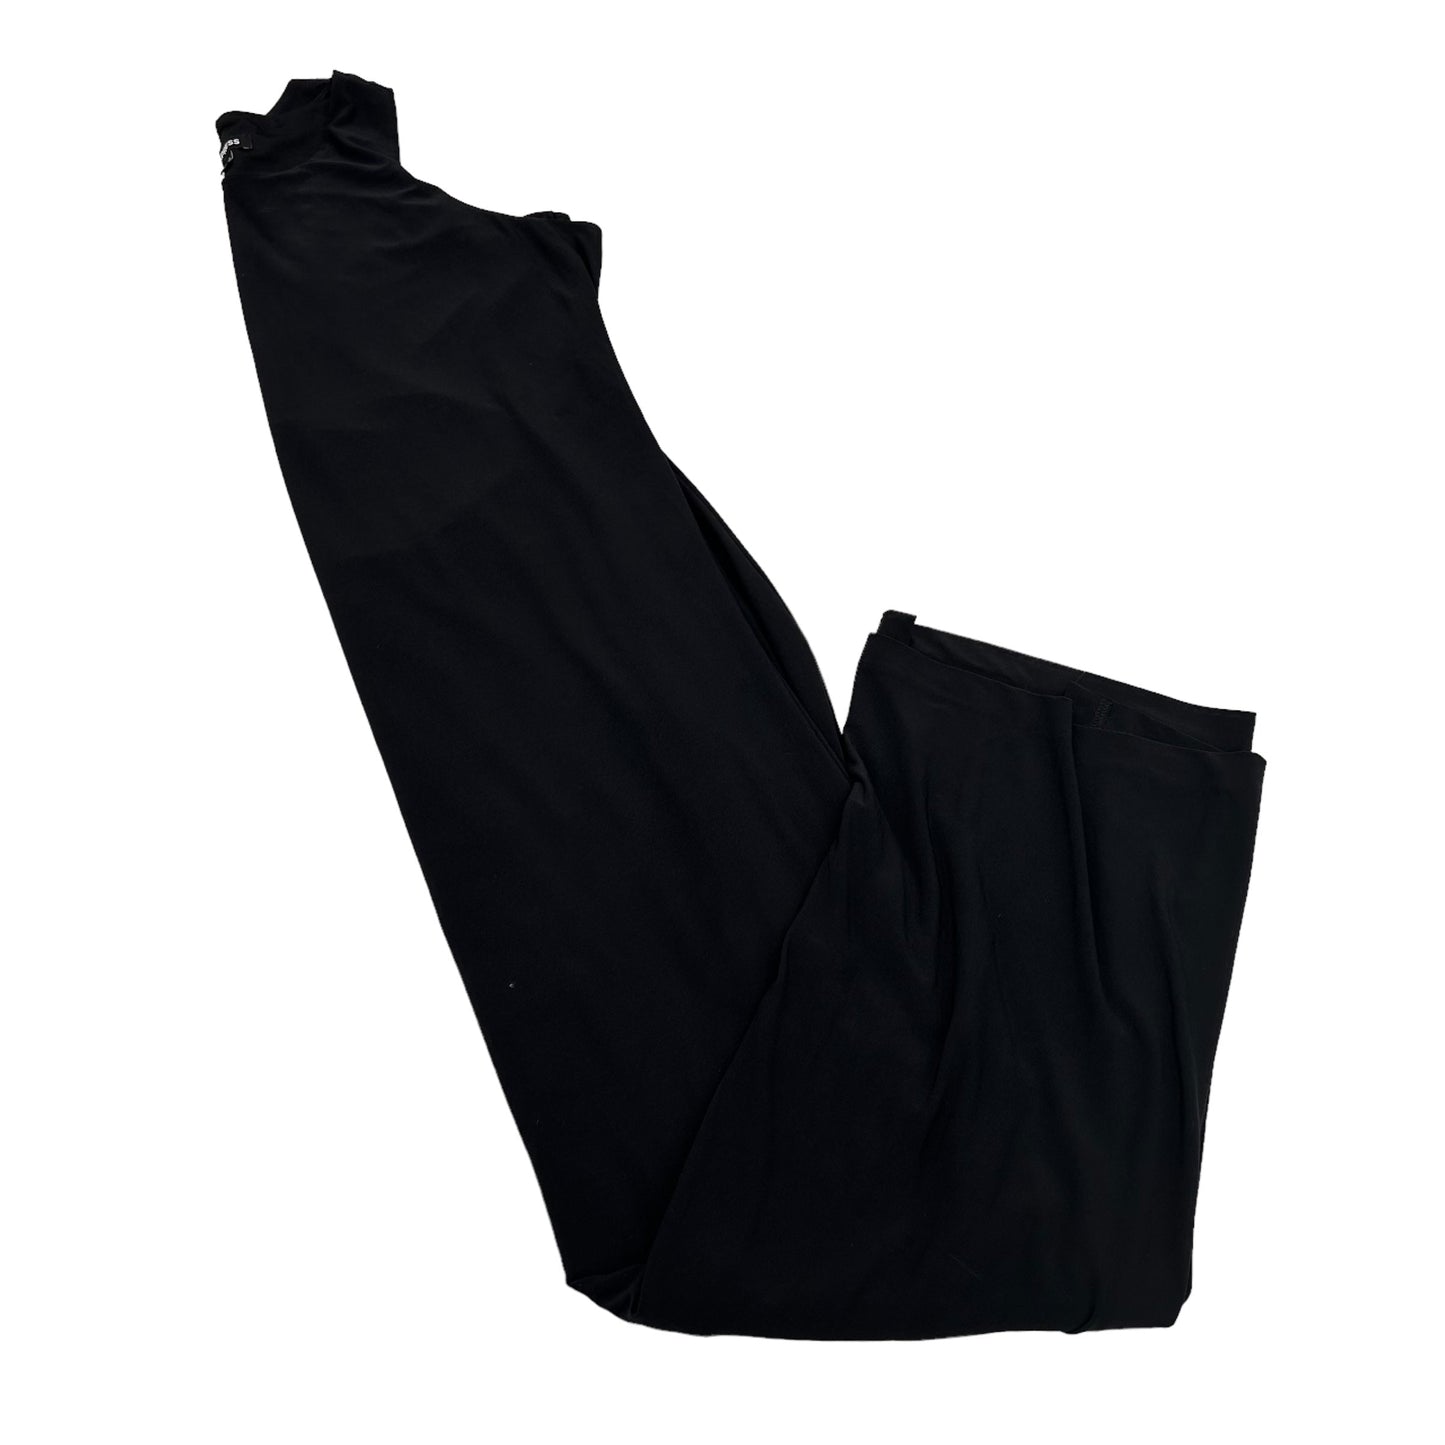 BLACK DRESS CASUAL MAXI by EXPRESS Size:XL